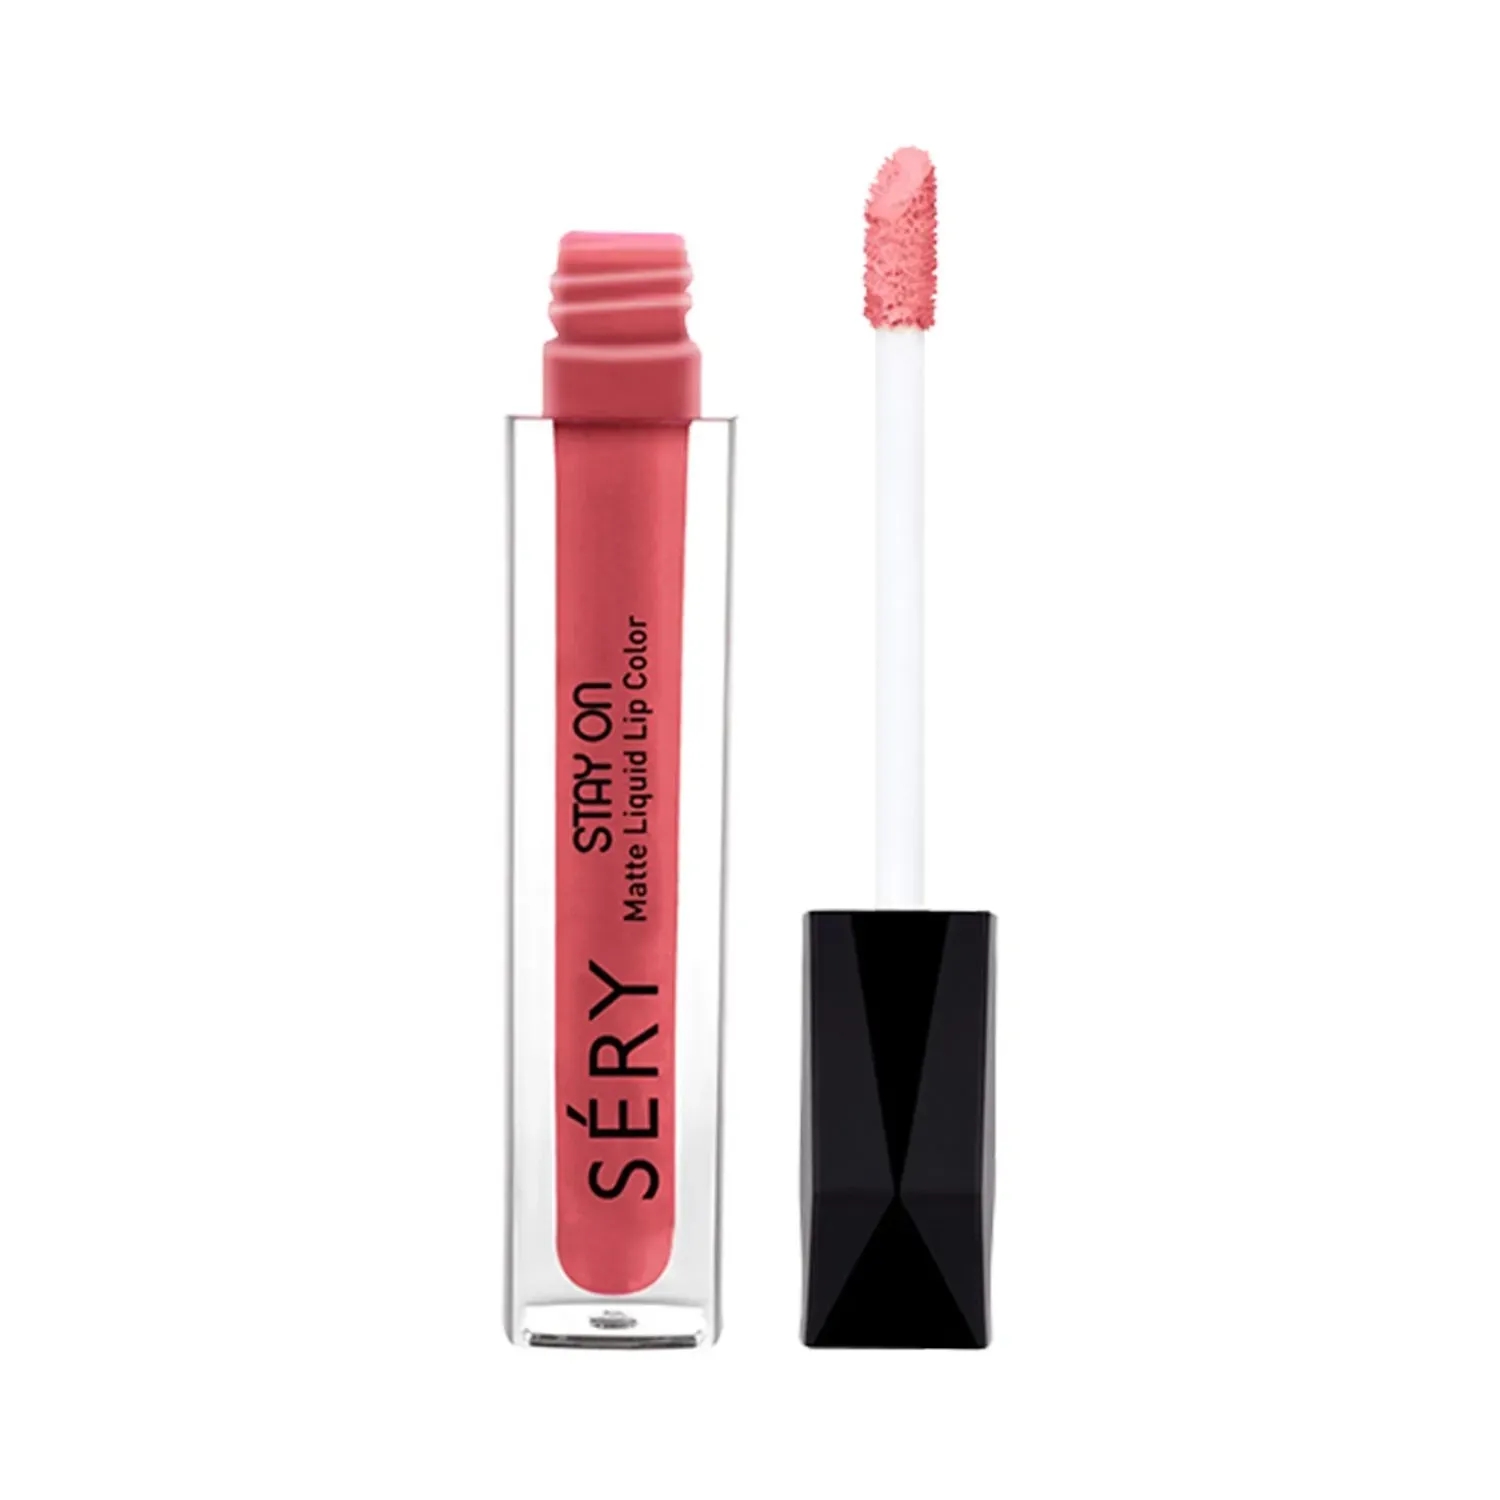 Sery Stay On Liquid Matte Lip Color - Delightful Nude LSO-09 (5ml)